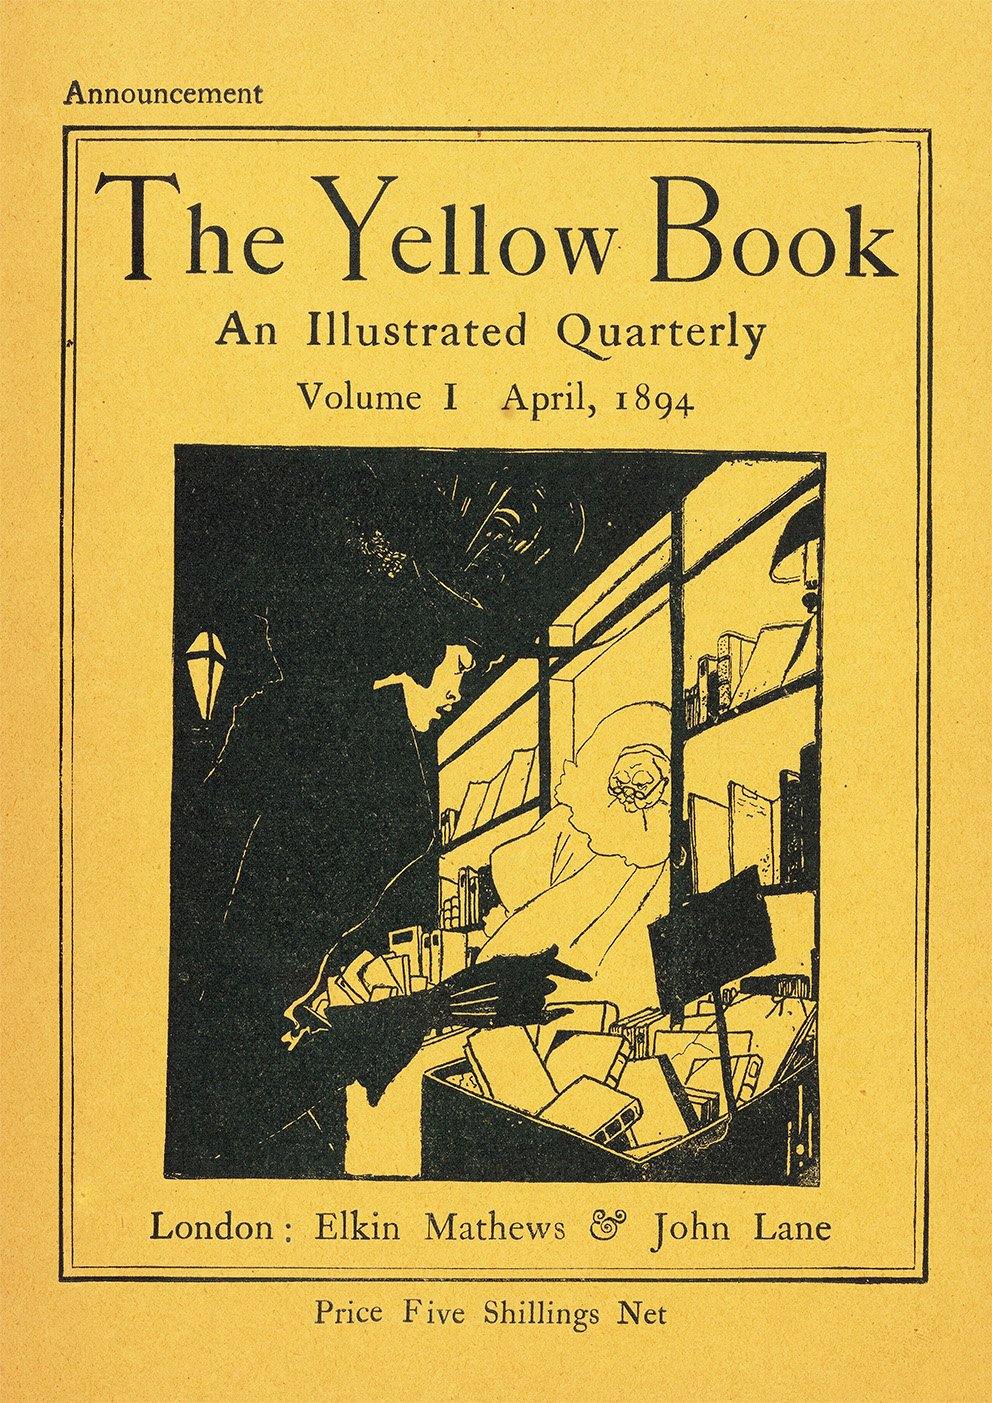 AUBREY BEARDSLEY: The Yellow Book Cover Art Prints - Pimlico Prints